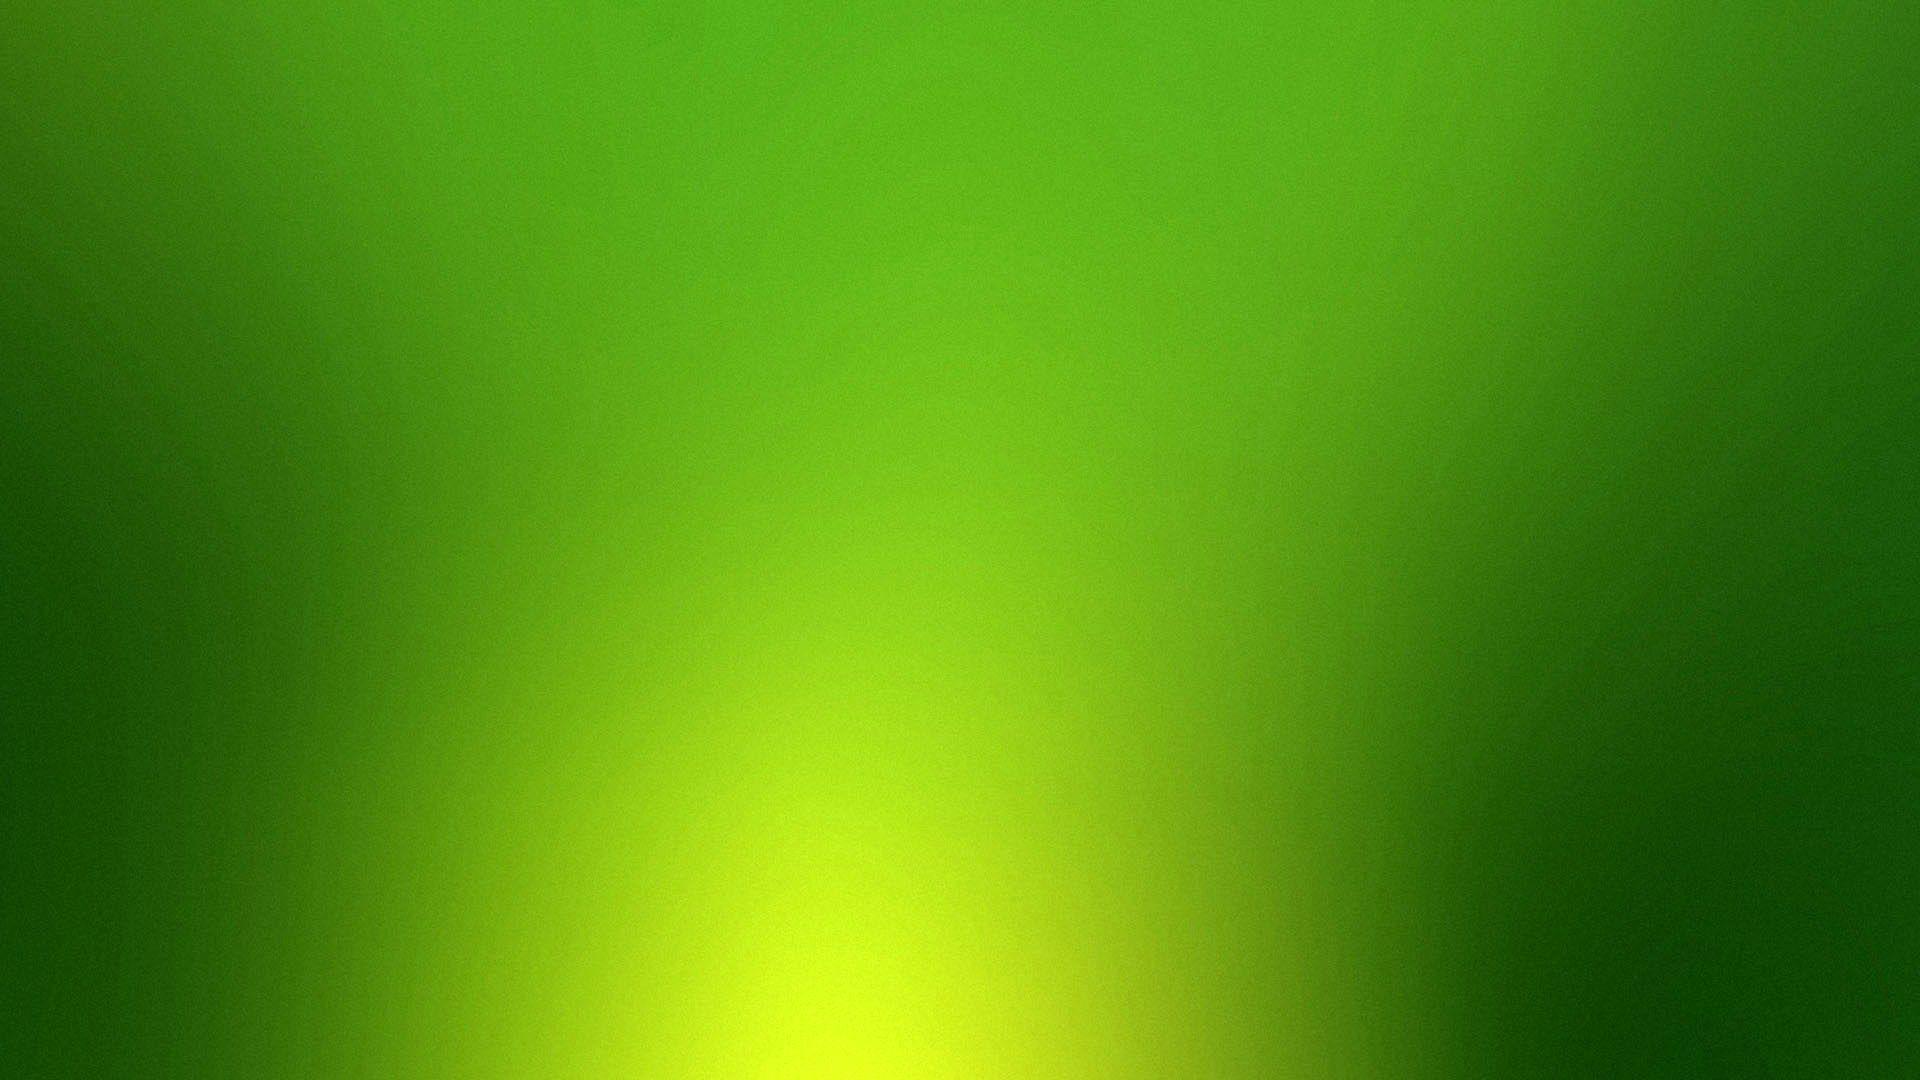 Light Green Backgrounds - Wallpaper Cave